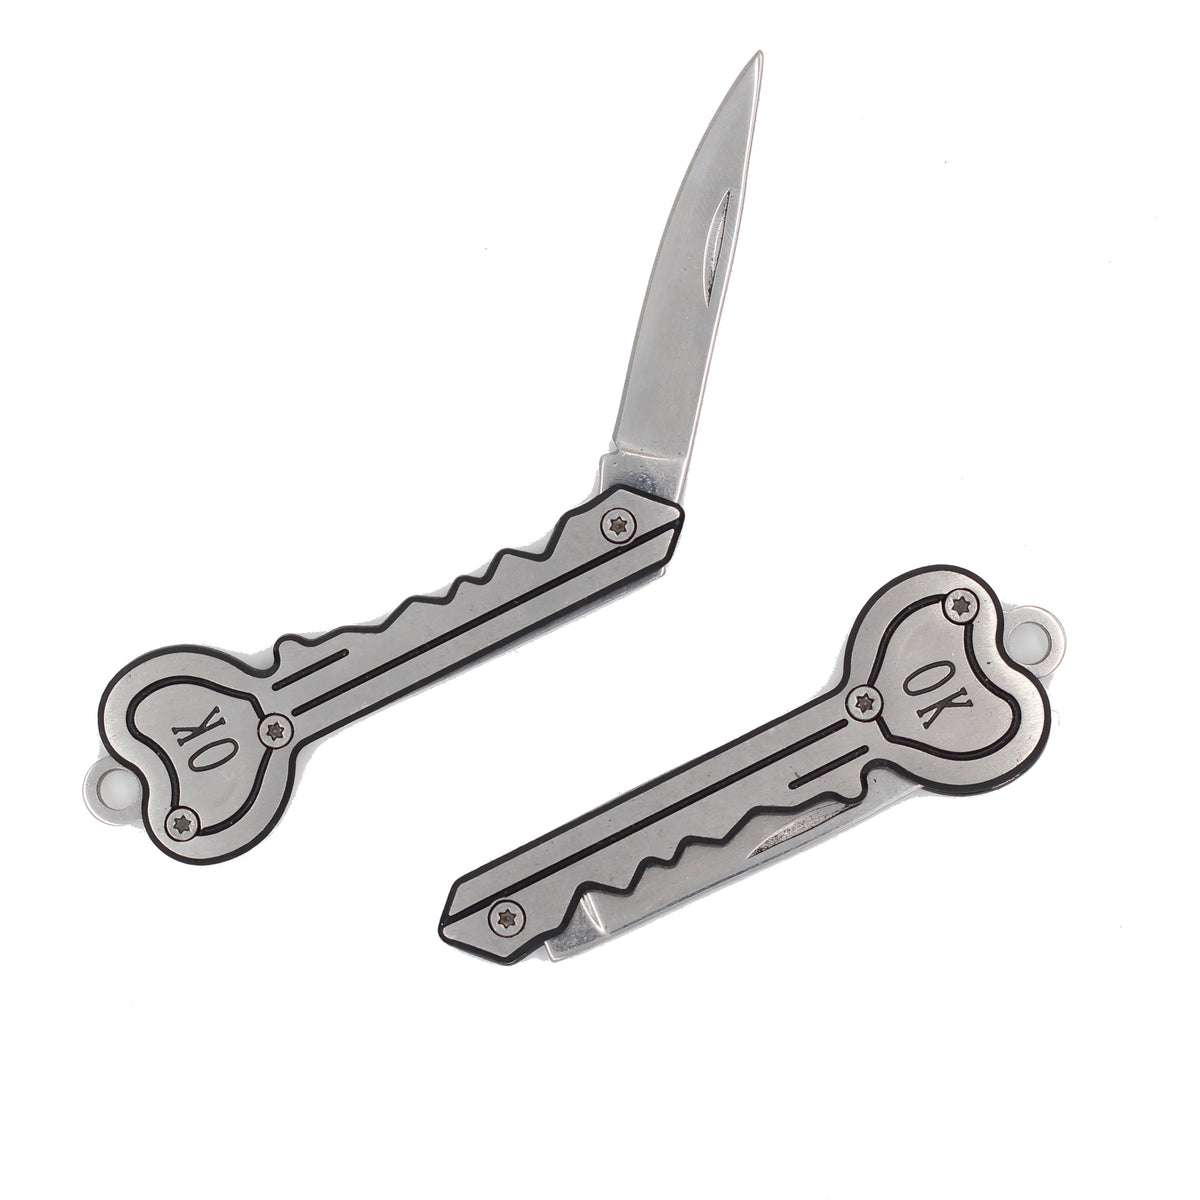 Real Sic Rainbow Keychain Knife - 'OK' Useful & Cute Utility Keychain Knife Black